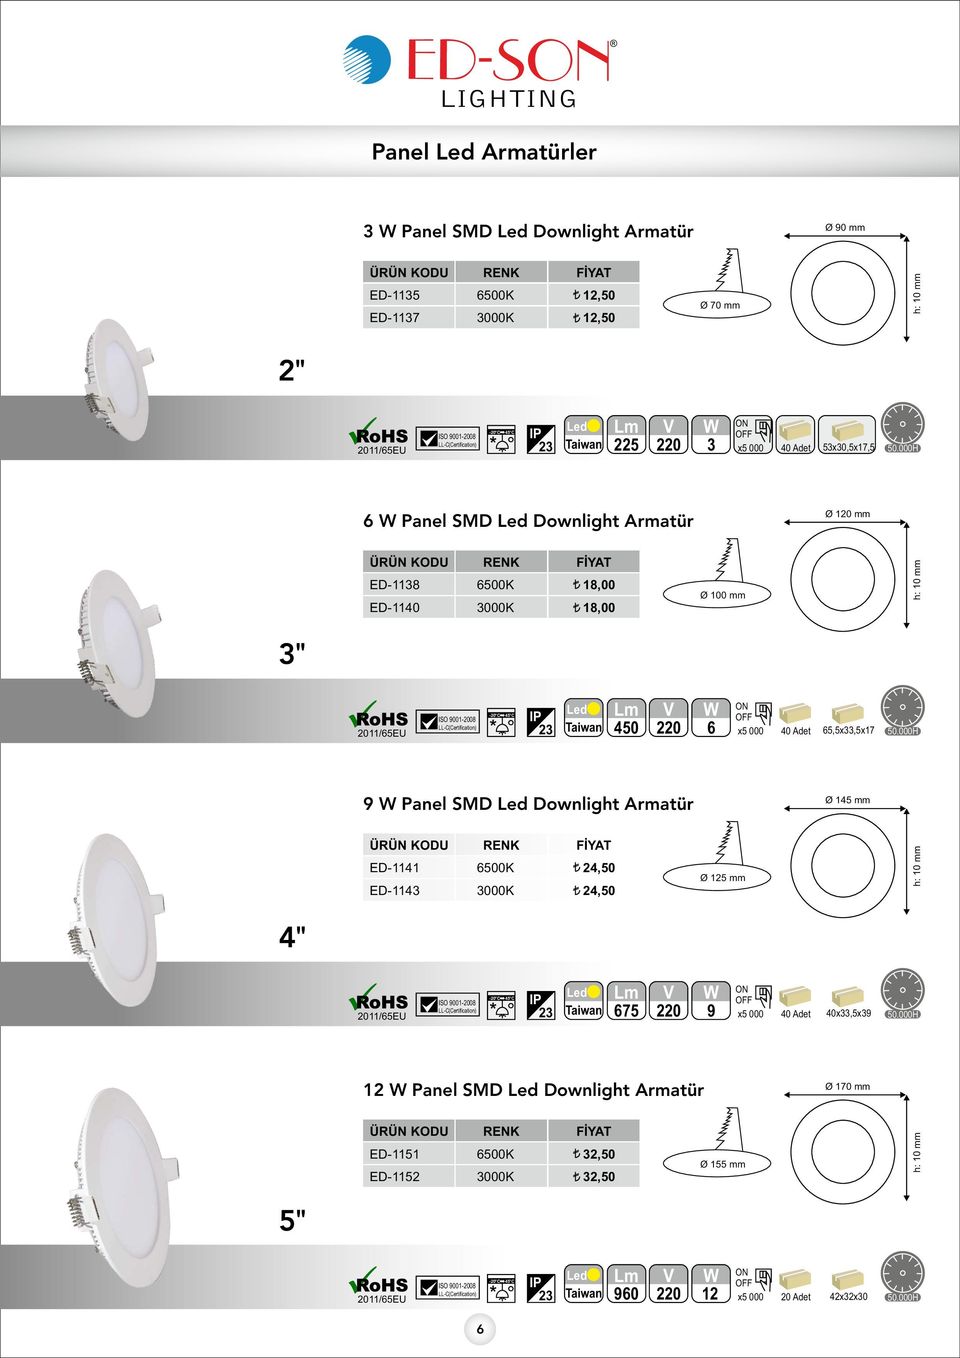 65,5x33,5x17 9 Panel SMD Downlight Armatür Ø 145 mm ED-1141 24,50 ED-1143 24,50 Ø 125 mm h: 10 mm 4" 675 9 x5 000 40 Adet